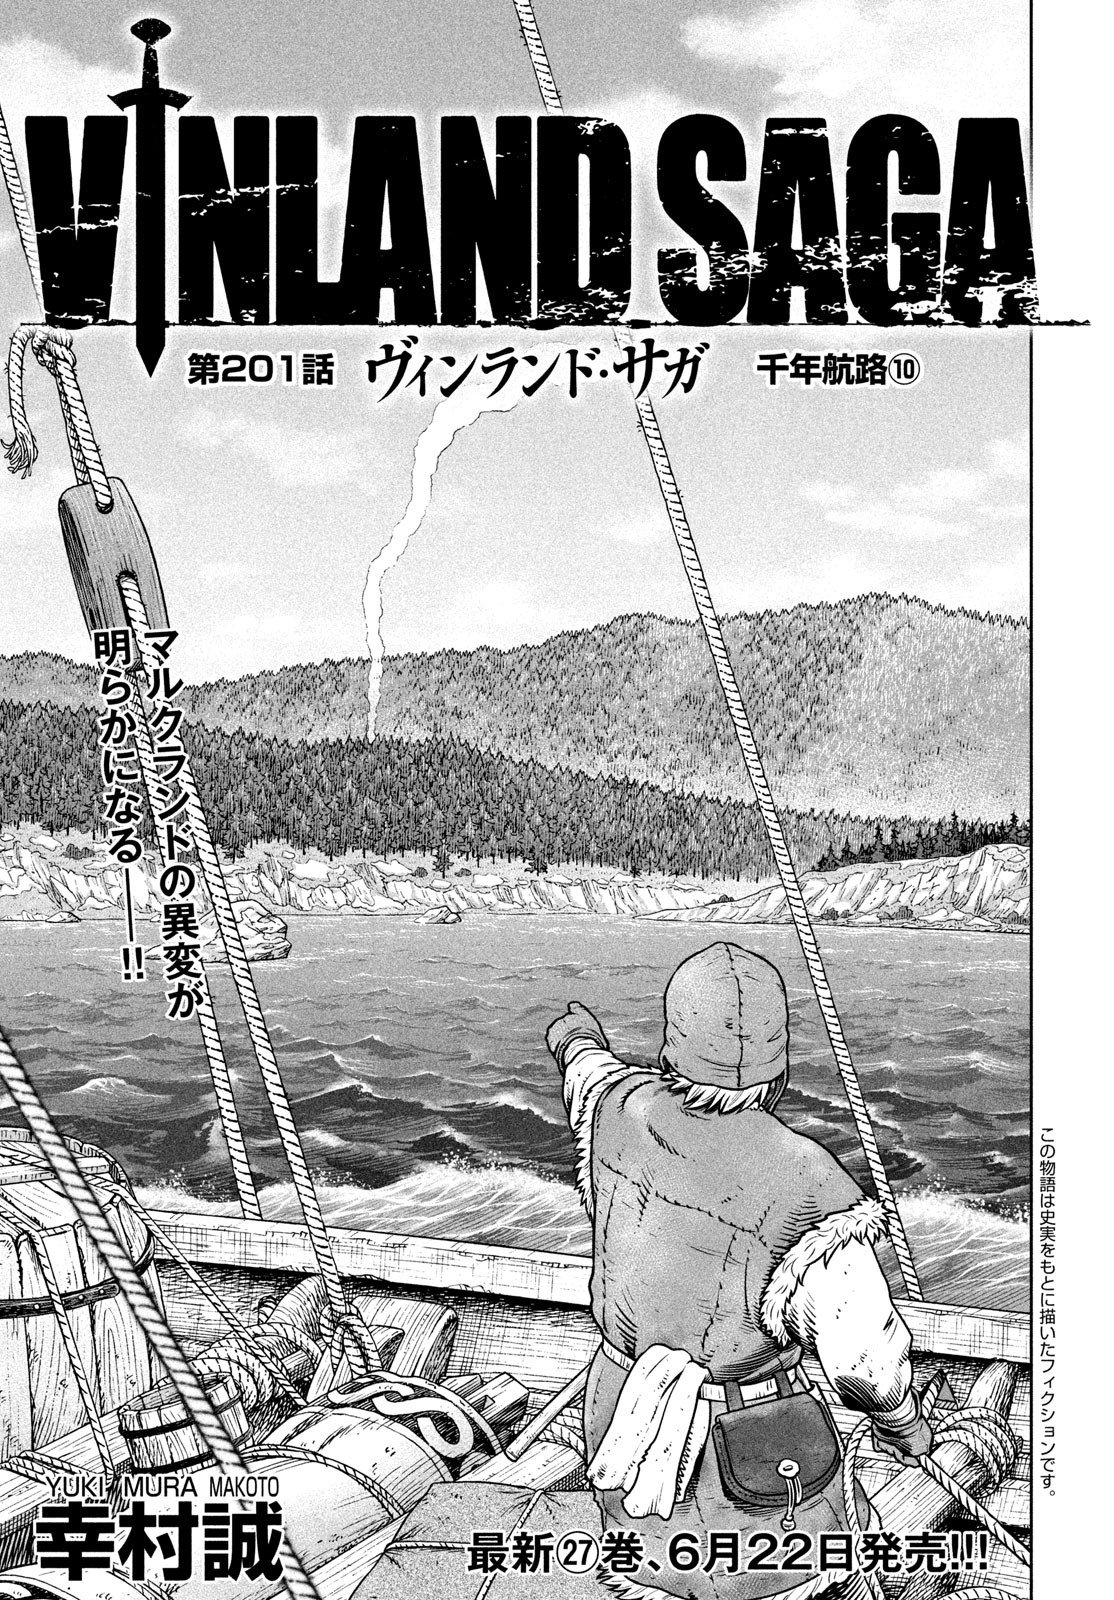 Volume 2, Vinland Saga Wiki